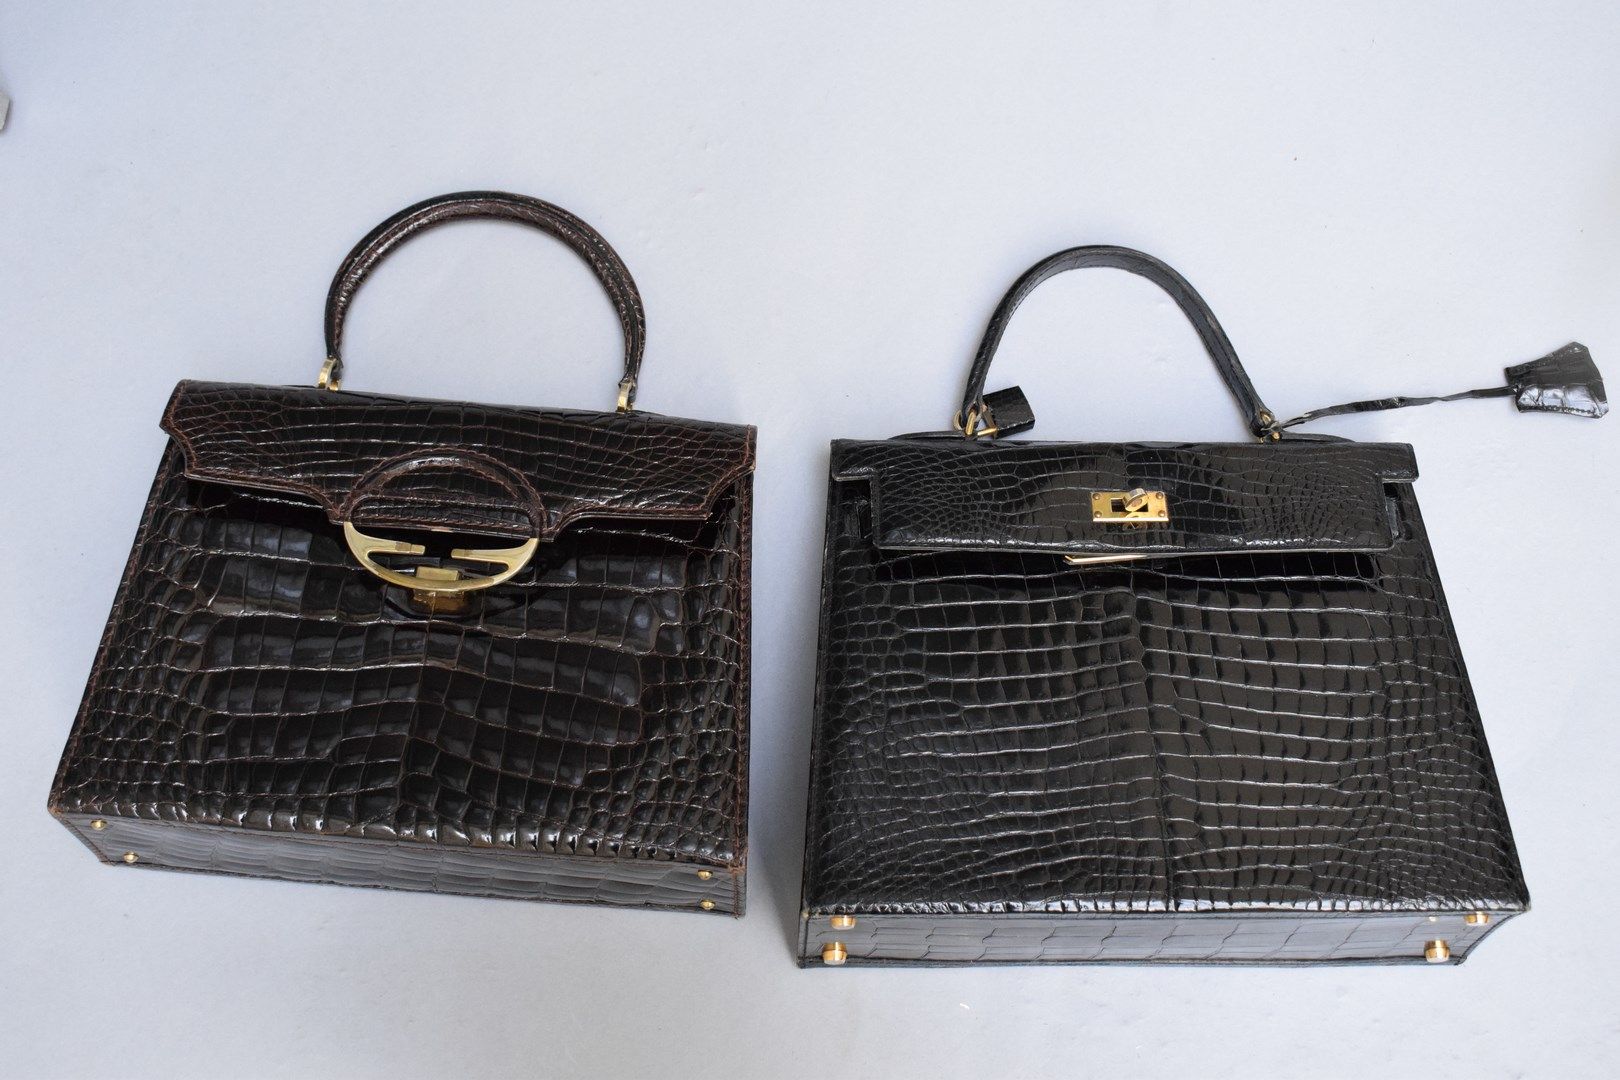 Louis Feraud Paris Black Multi Color Leather Purse Handbag